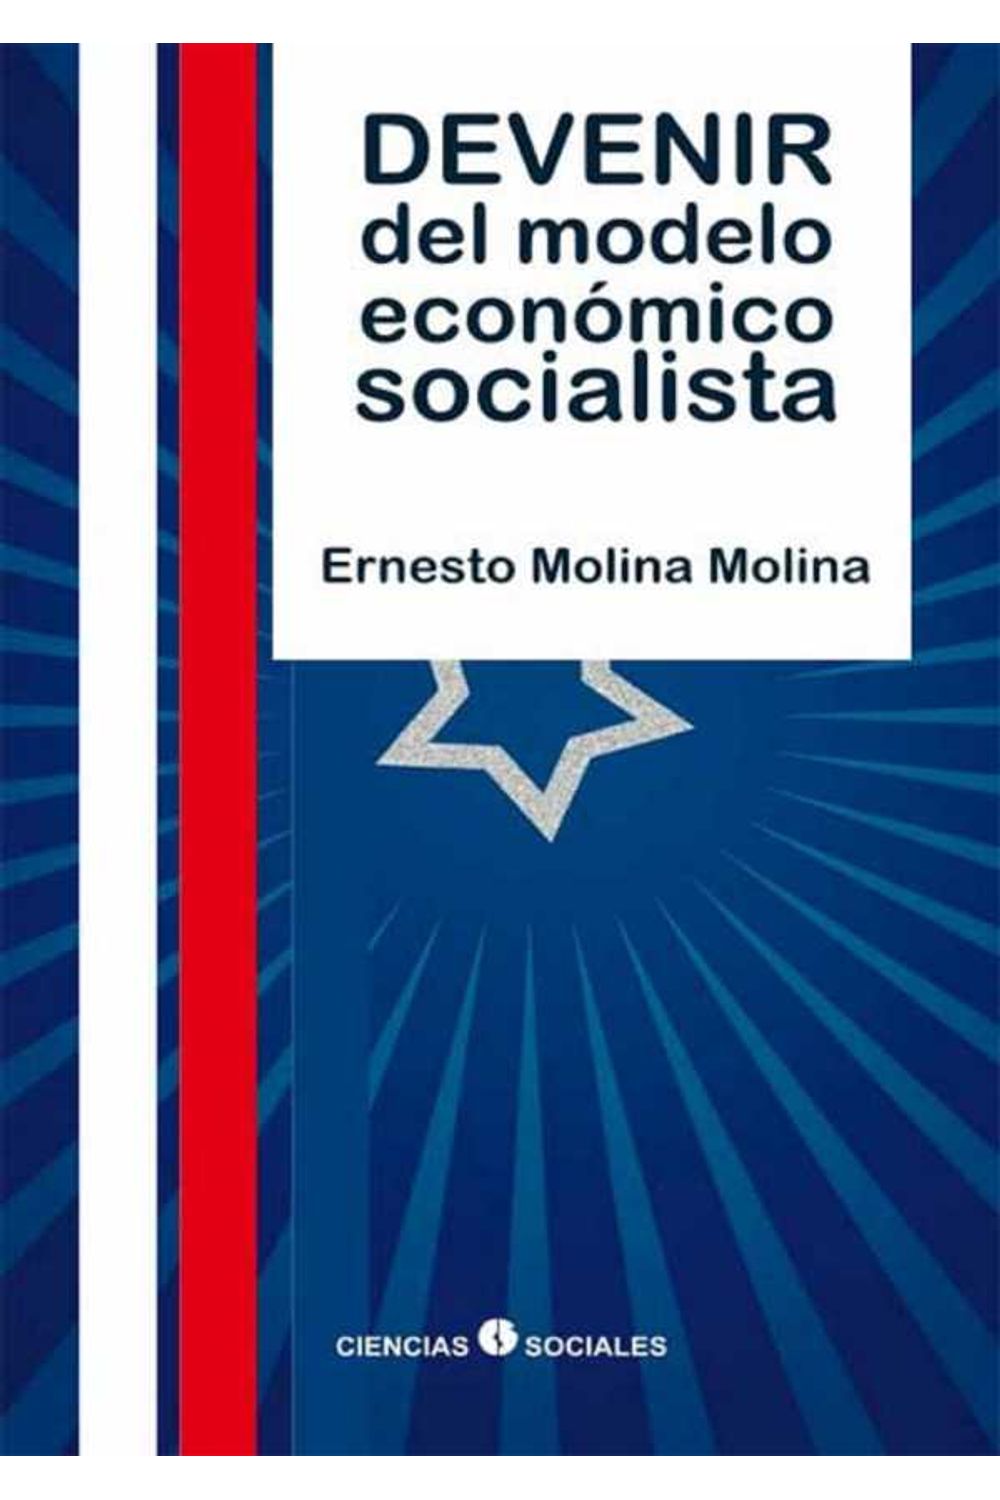 bw-devenir-del-modelo-econoacutemico-socialista-ruth-9789590618413